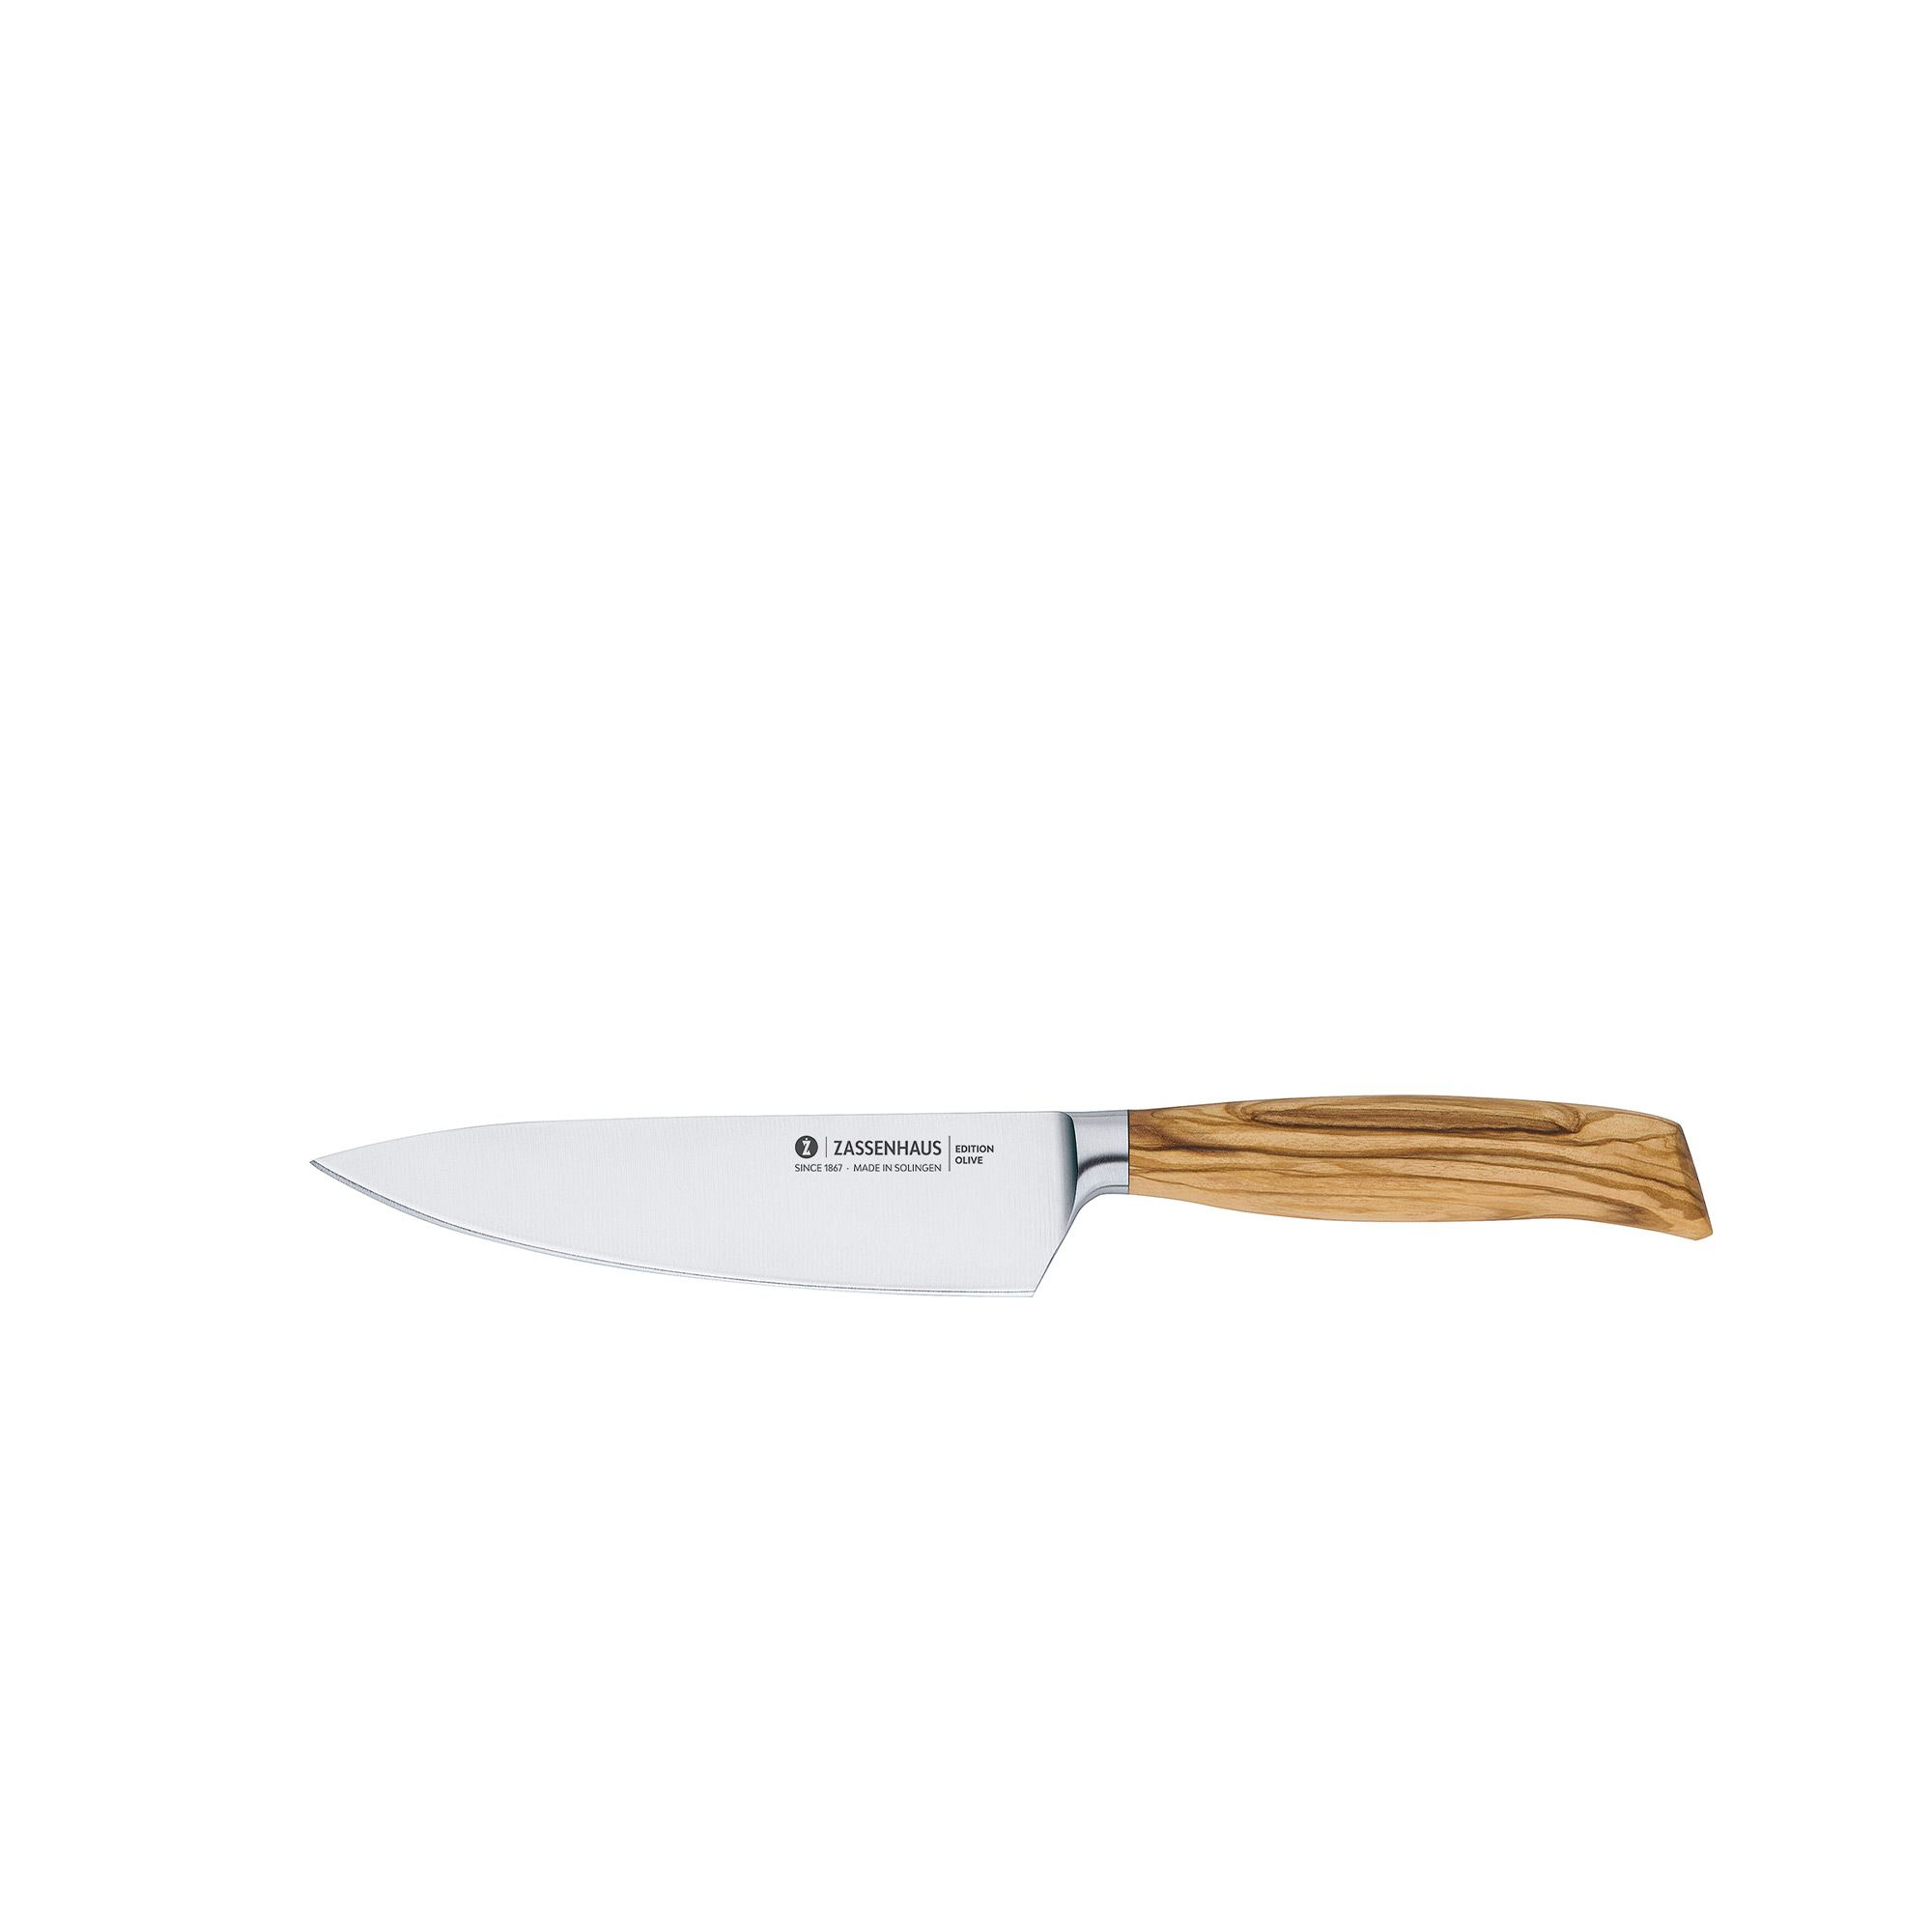 Zassenhaus - cooking knife 16 cm  - EDITION OLIVE